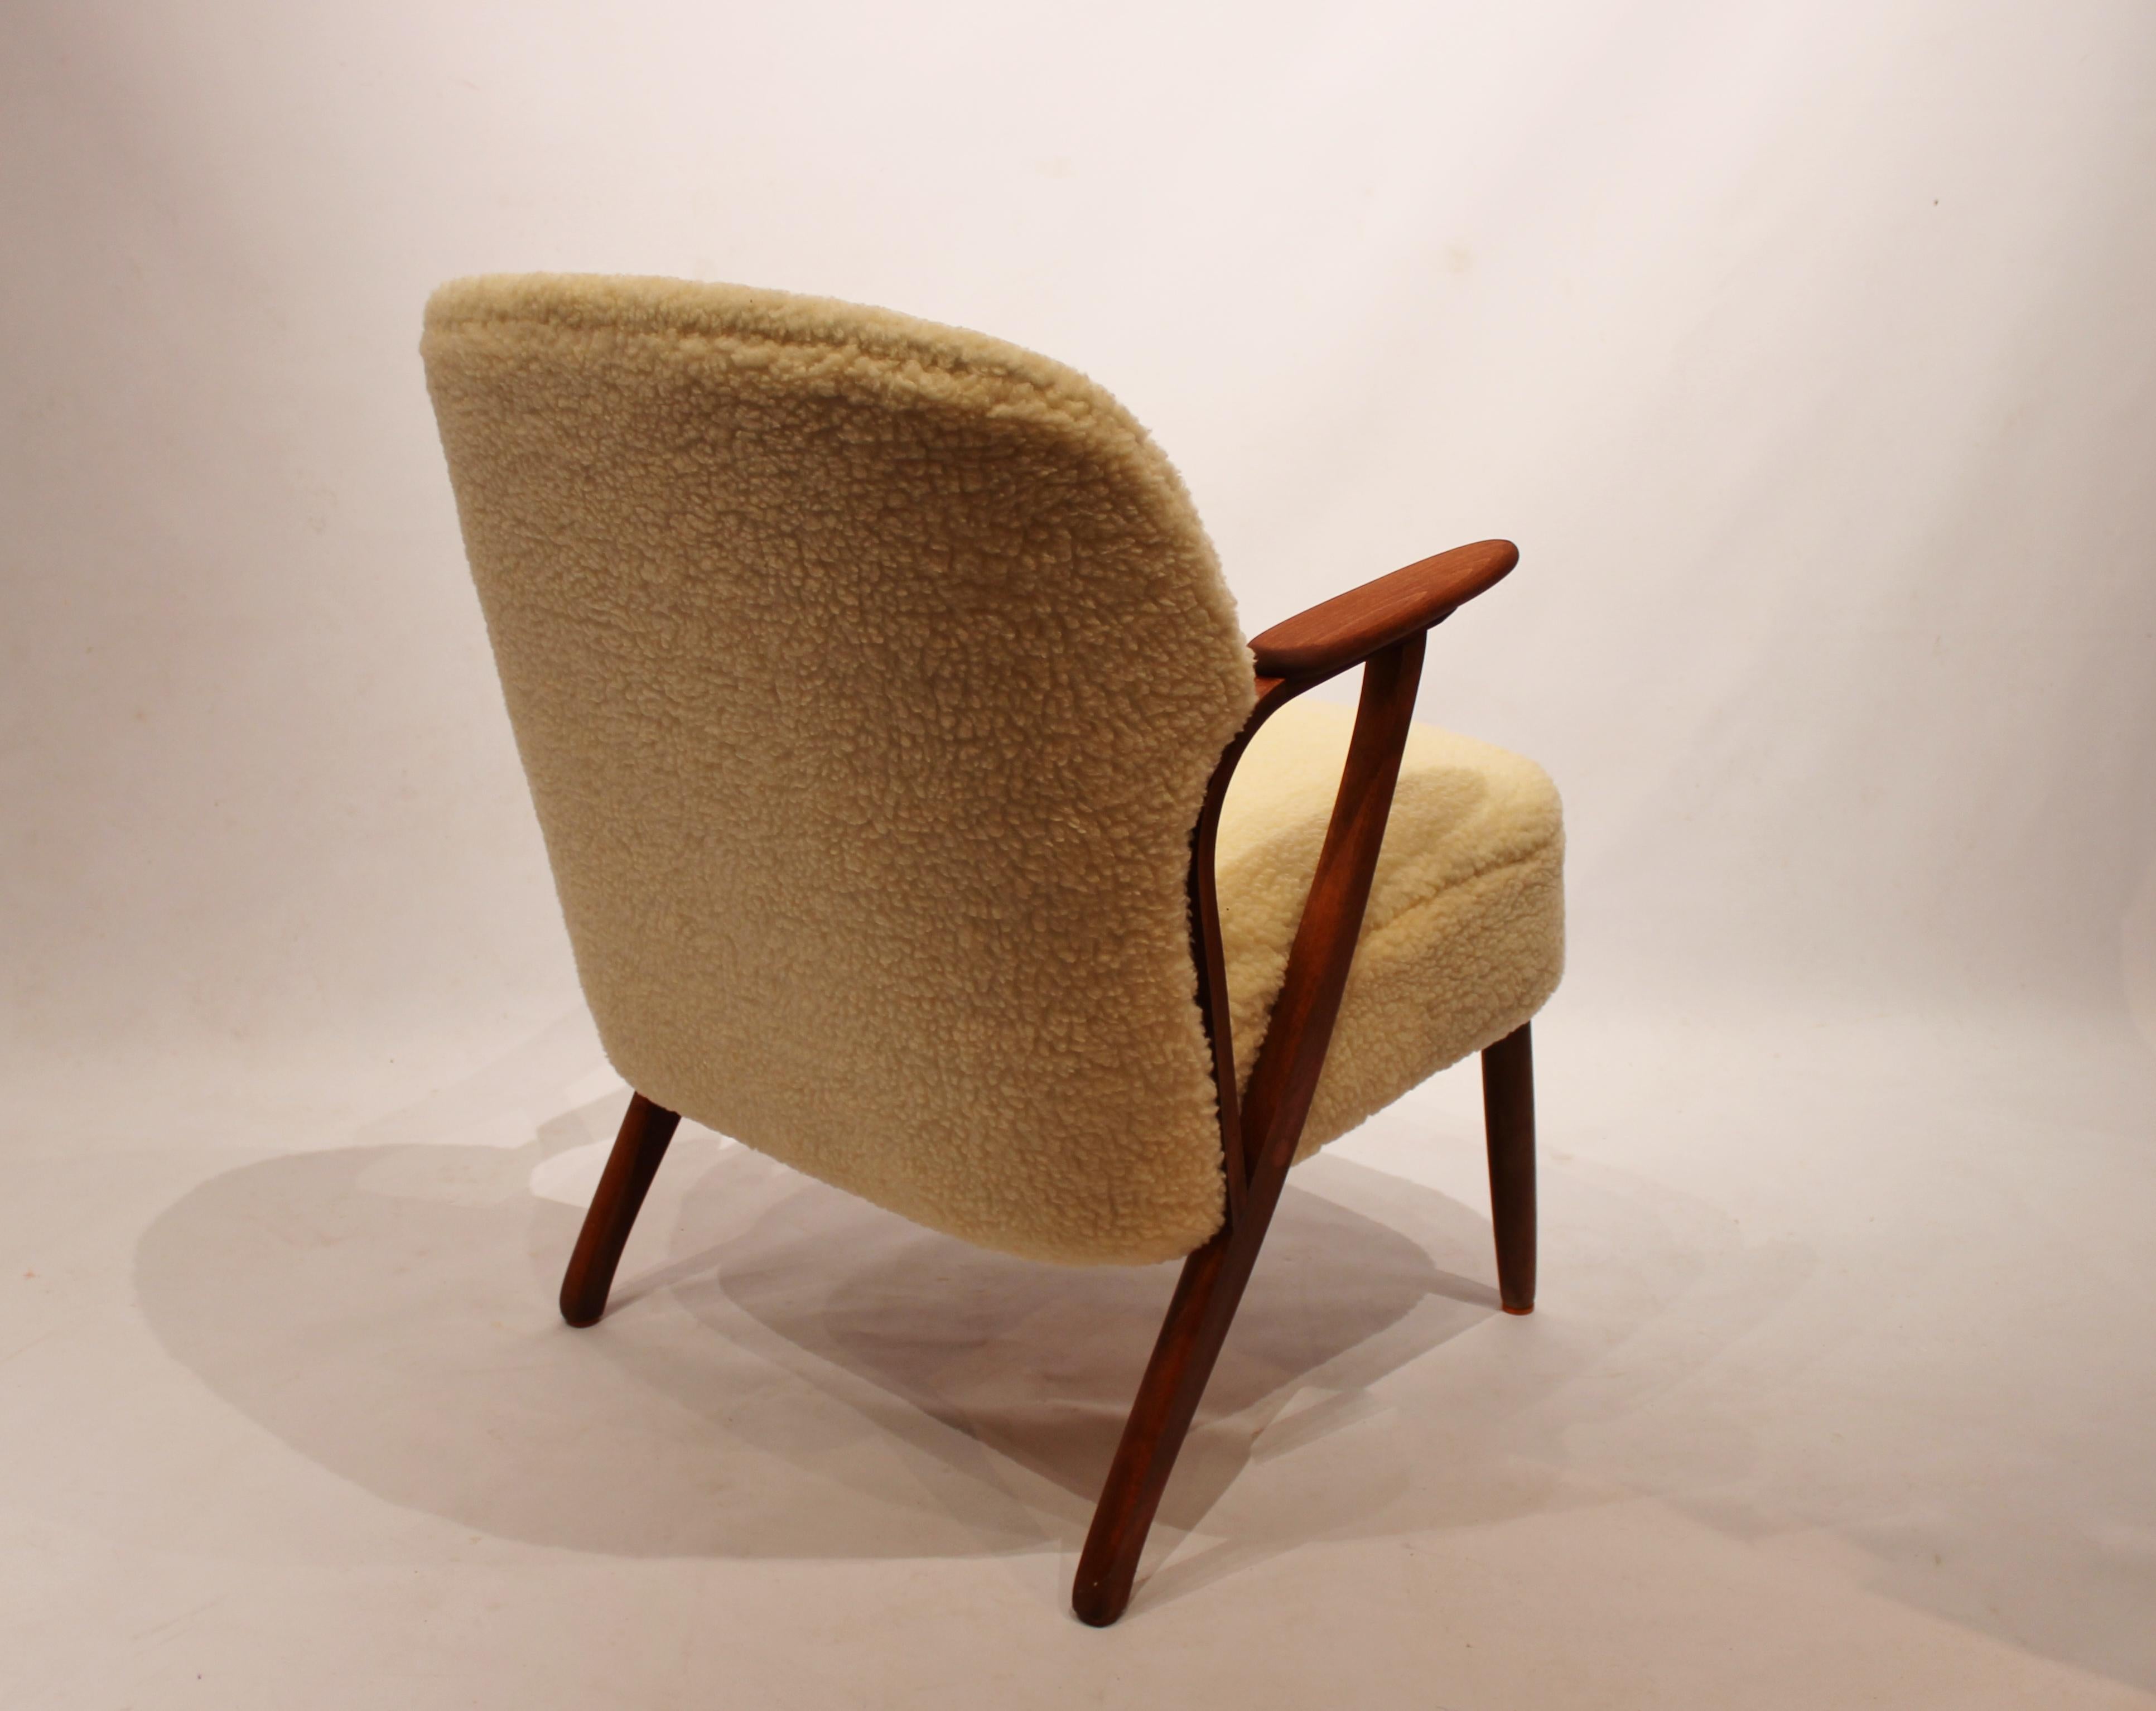 Easy Chair Upholstered in Sheep Wool, Danish Design, 1960s (Skandinavische Moderne)